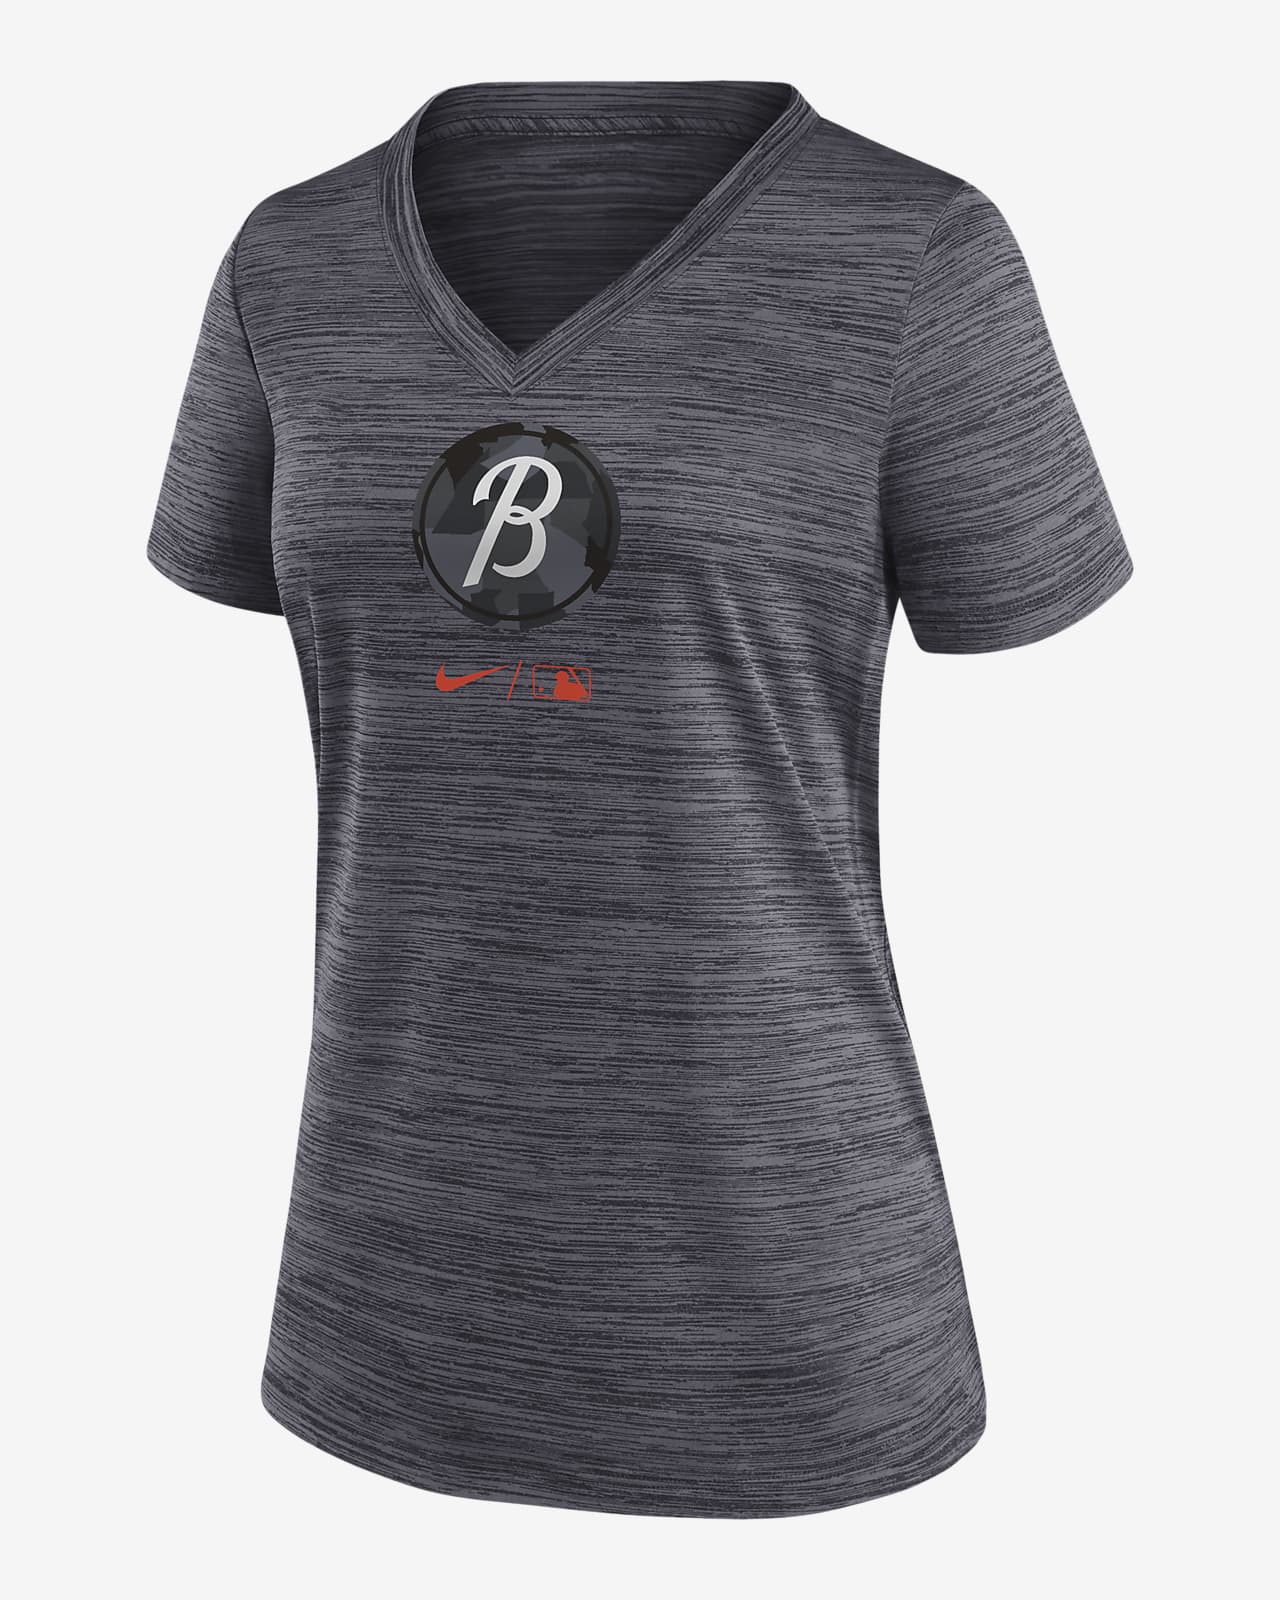 New Era Apparel Girl's Baltimore Orioles Tie Dye V-Neck T-Shirt